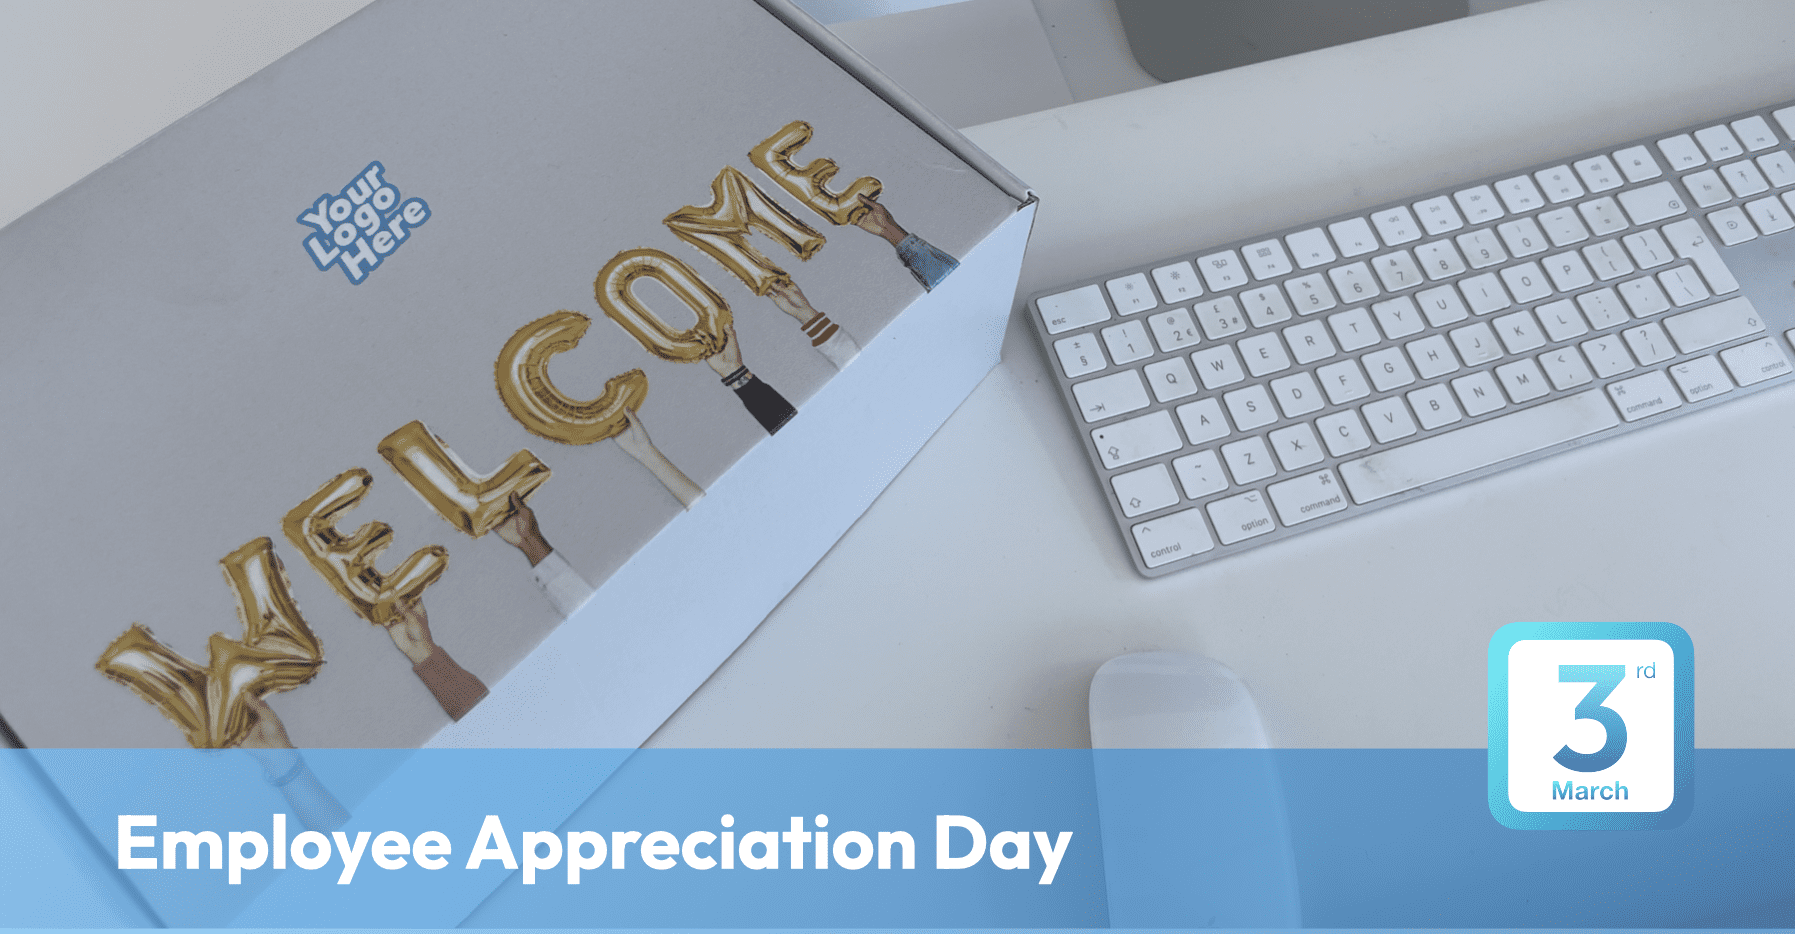 Employee Appreciation Day 2023 Geiger Uk 